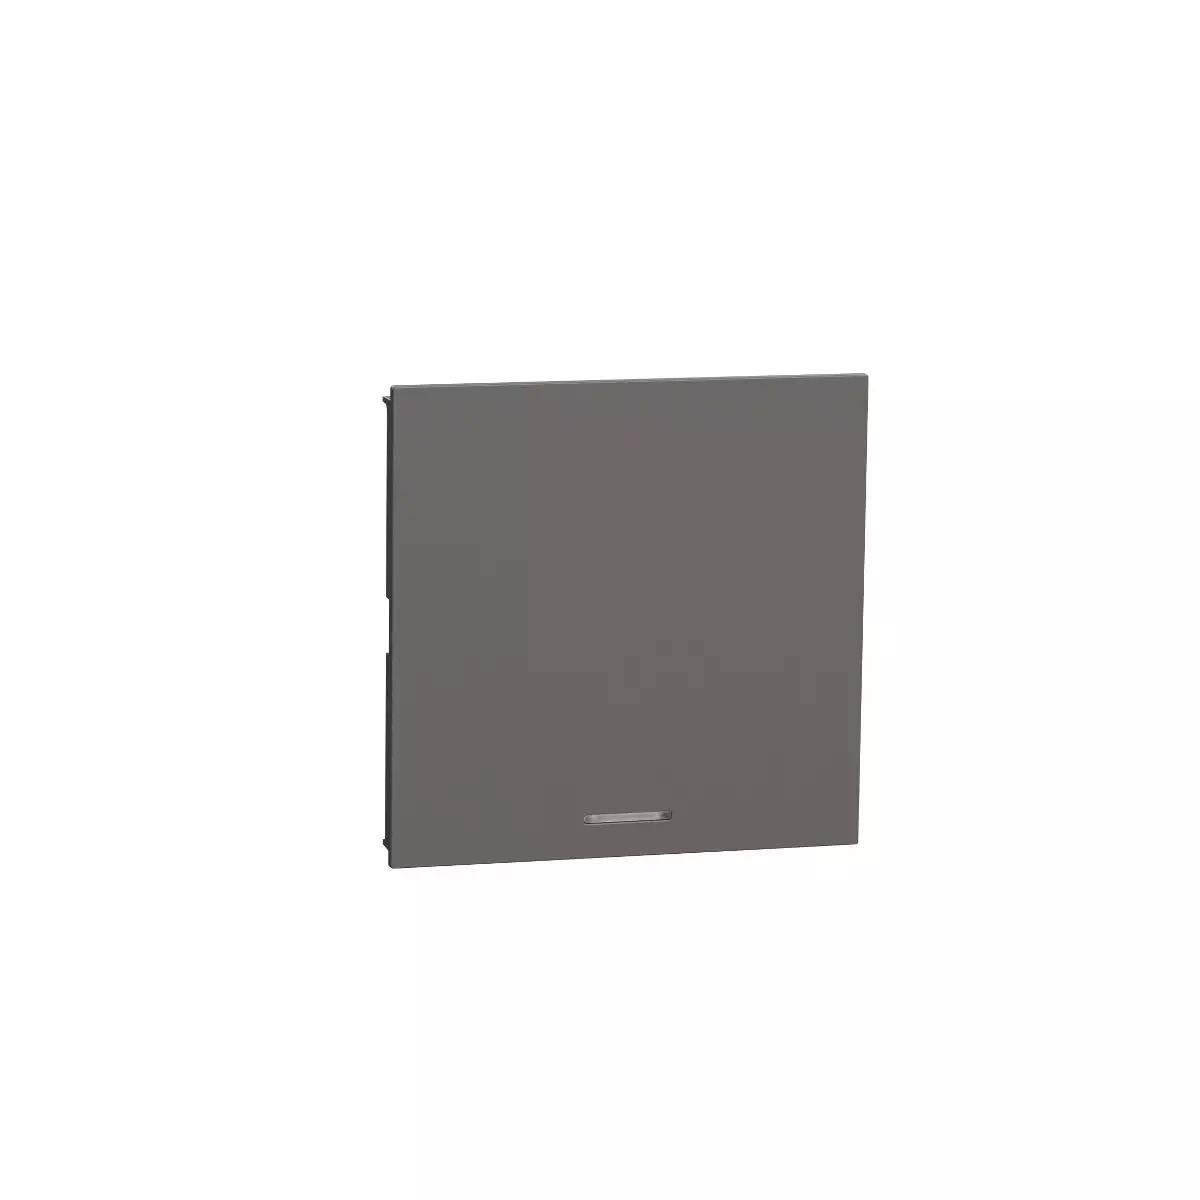 Switch, Avataron A, 16AX 250V, 1 Way with Fluorescent E sized, Black